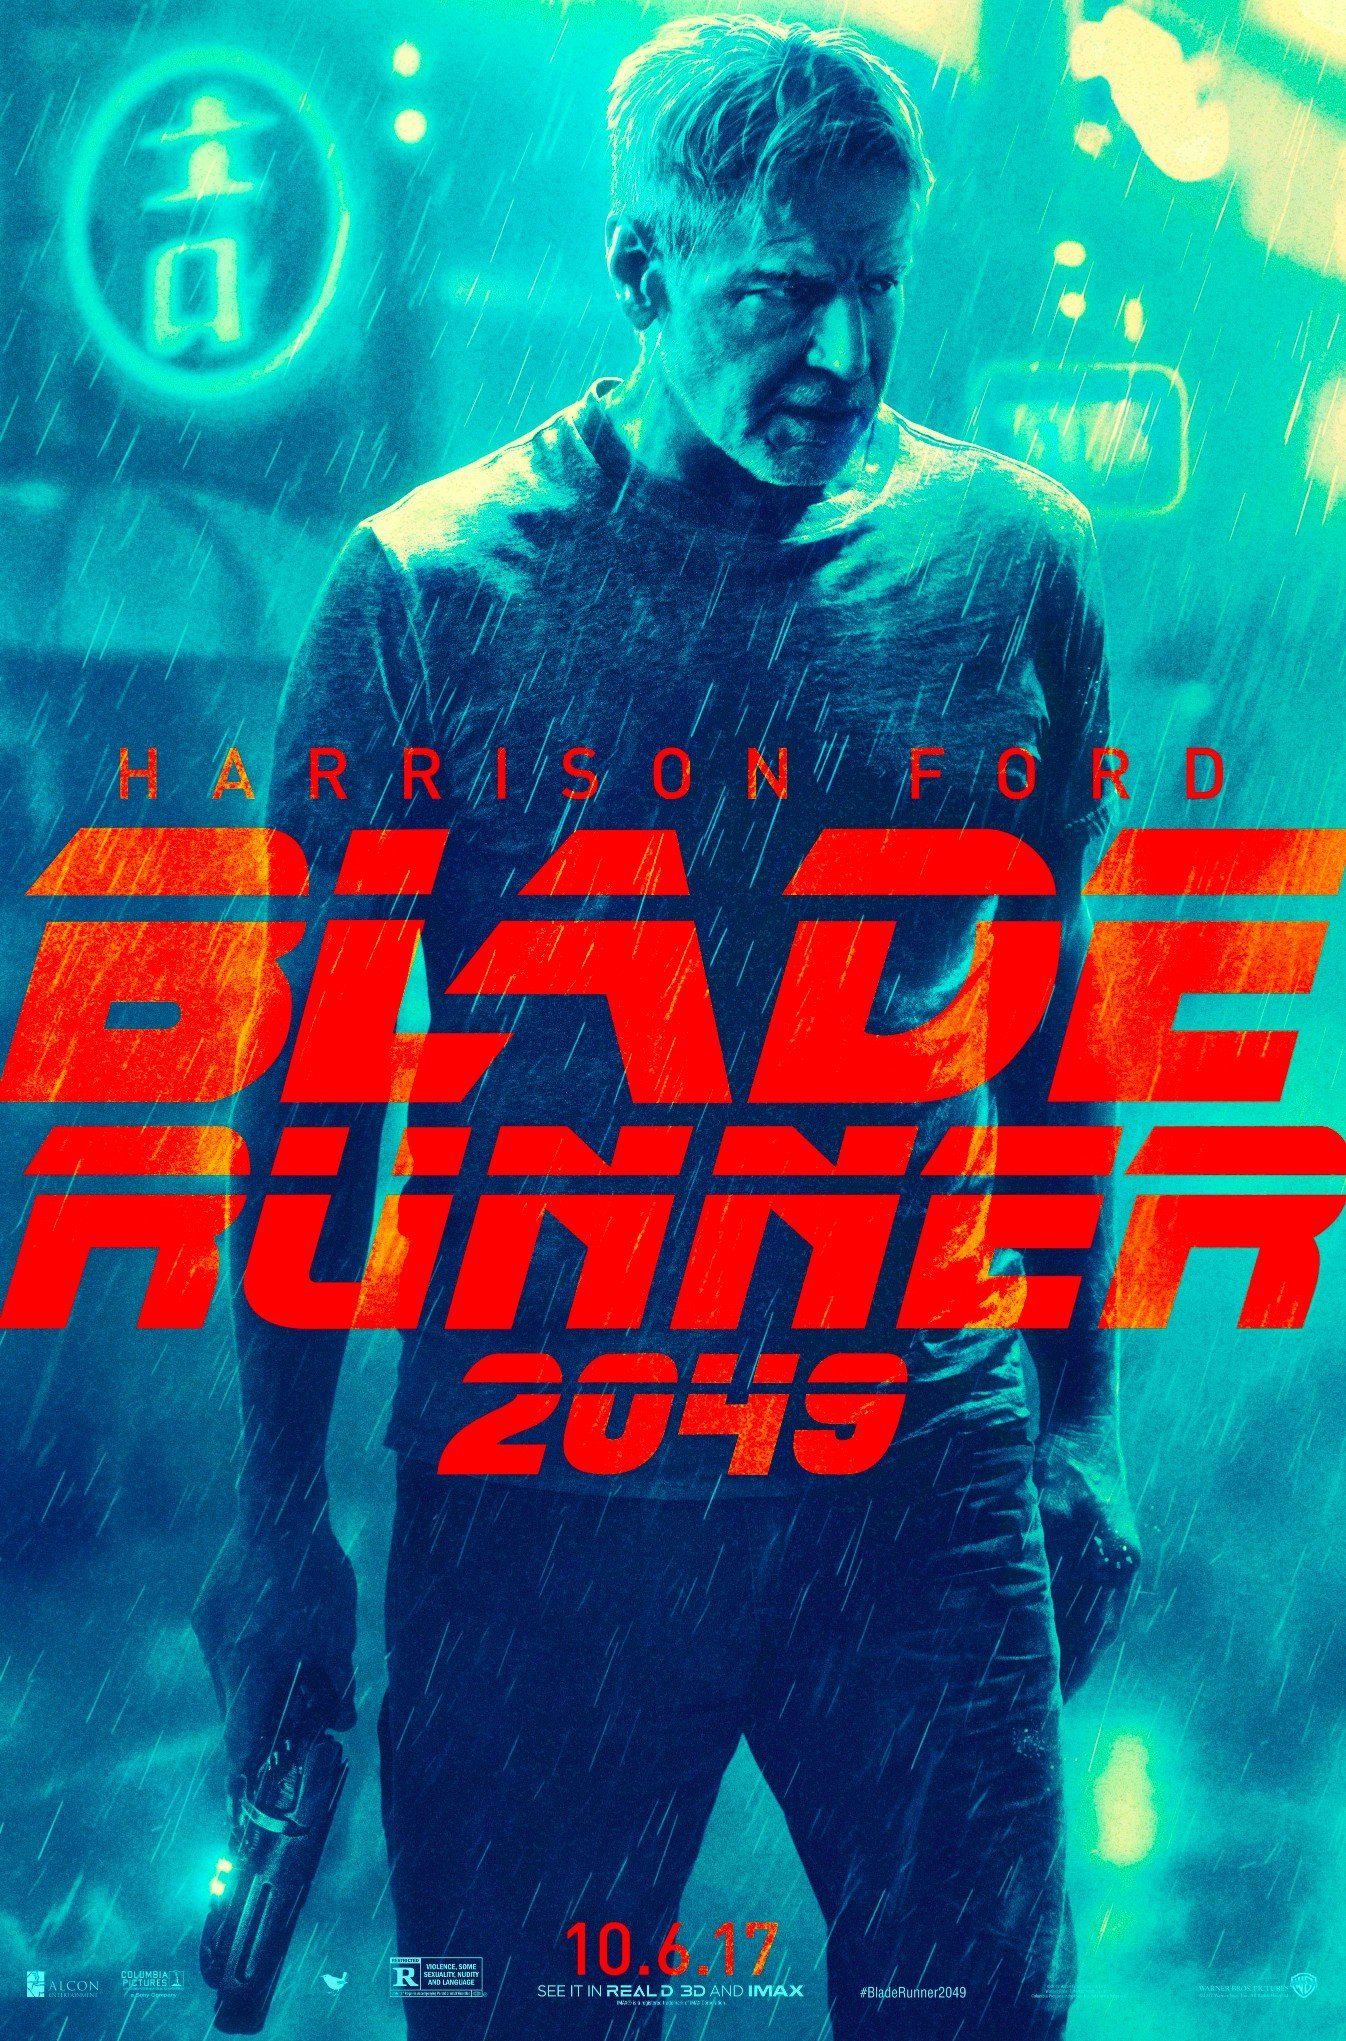 Blade Runner 2049 Movie Wallpapers